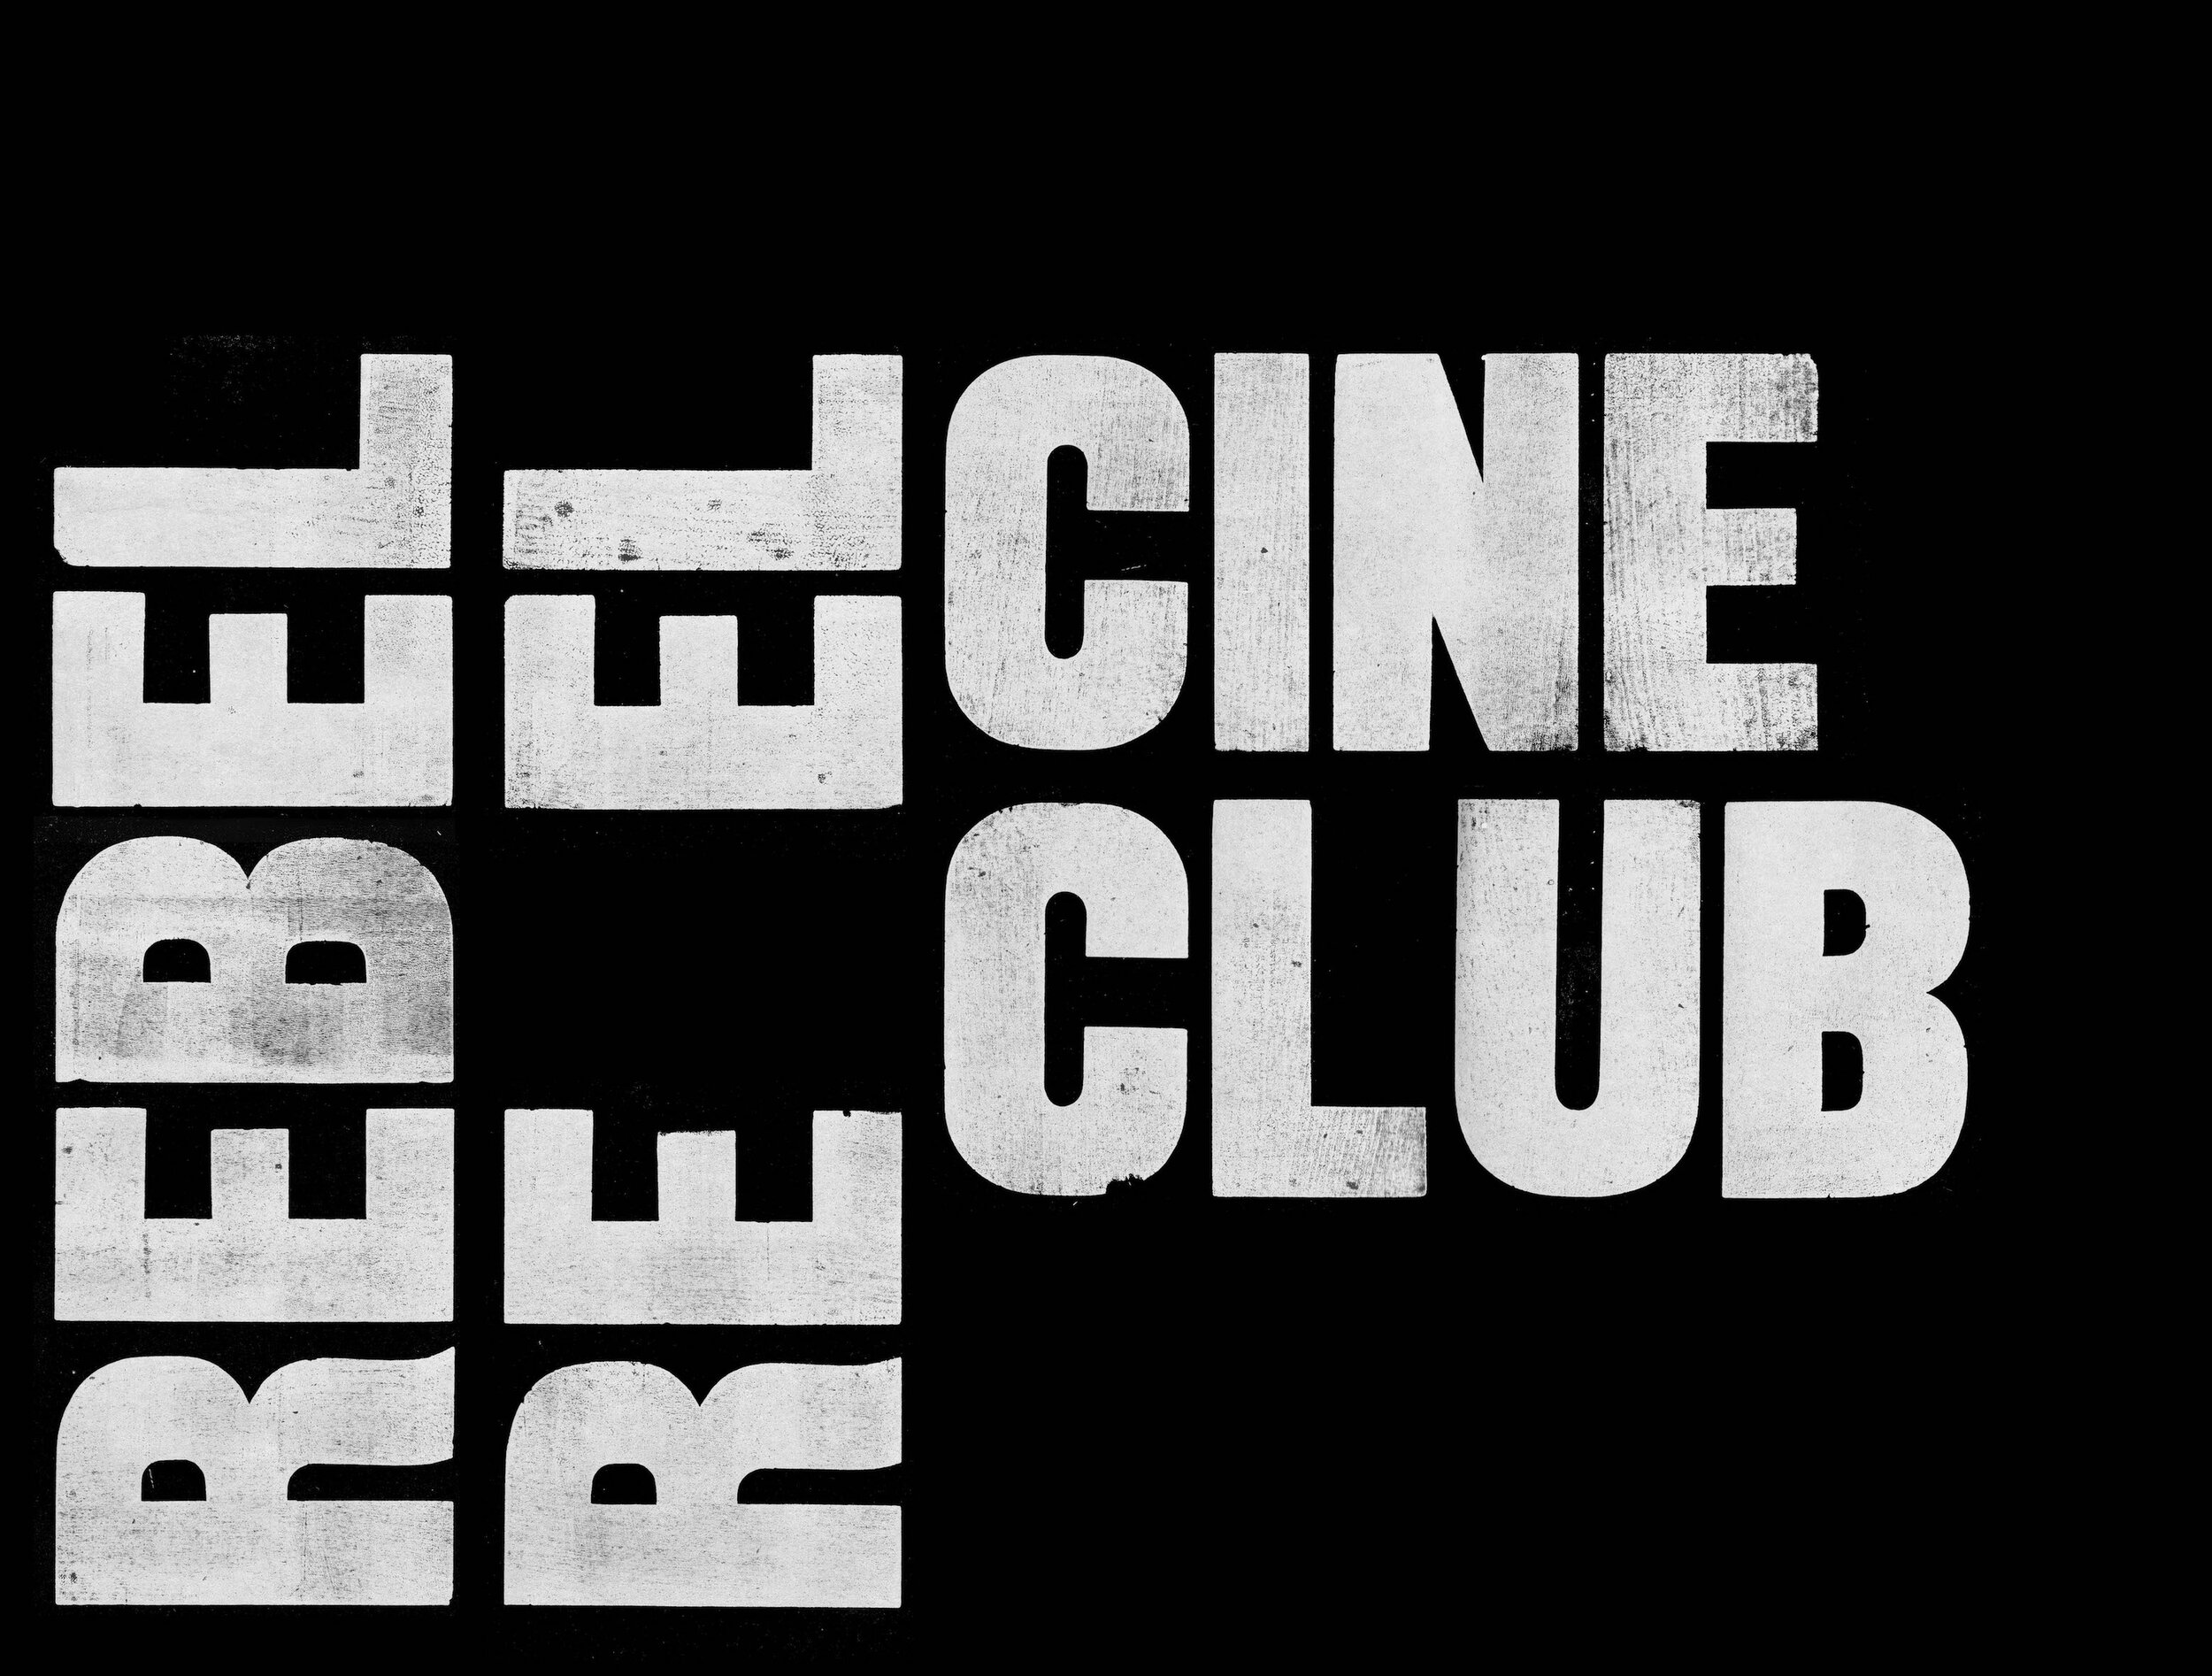 Cineclub - Filmkritik: Accident Man